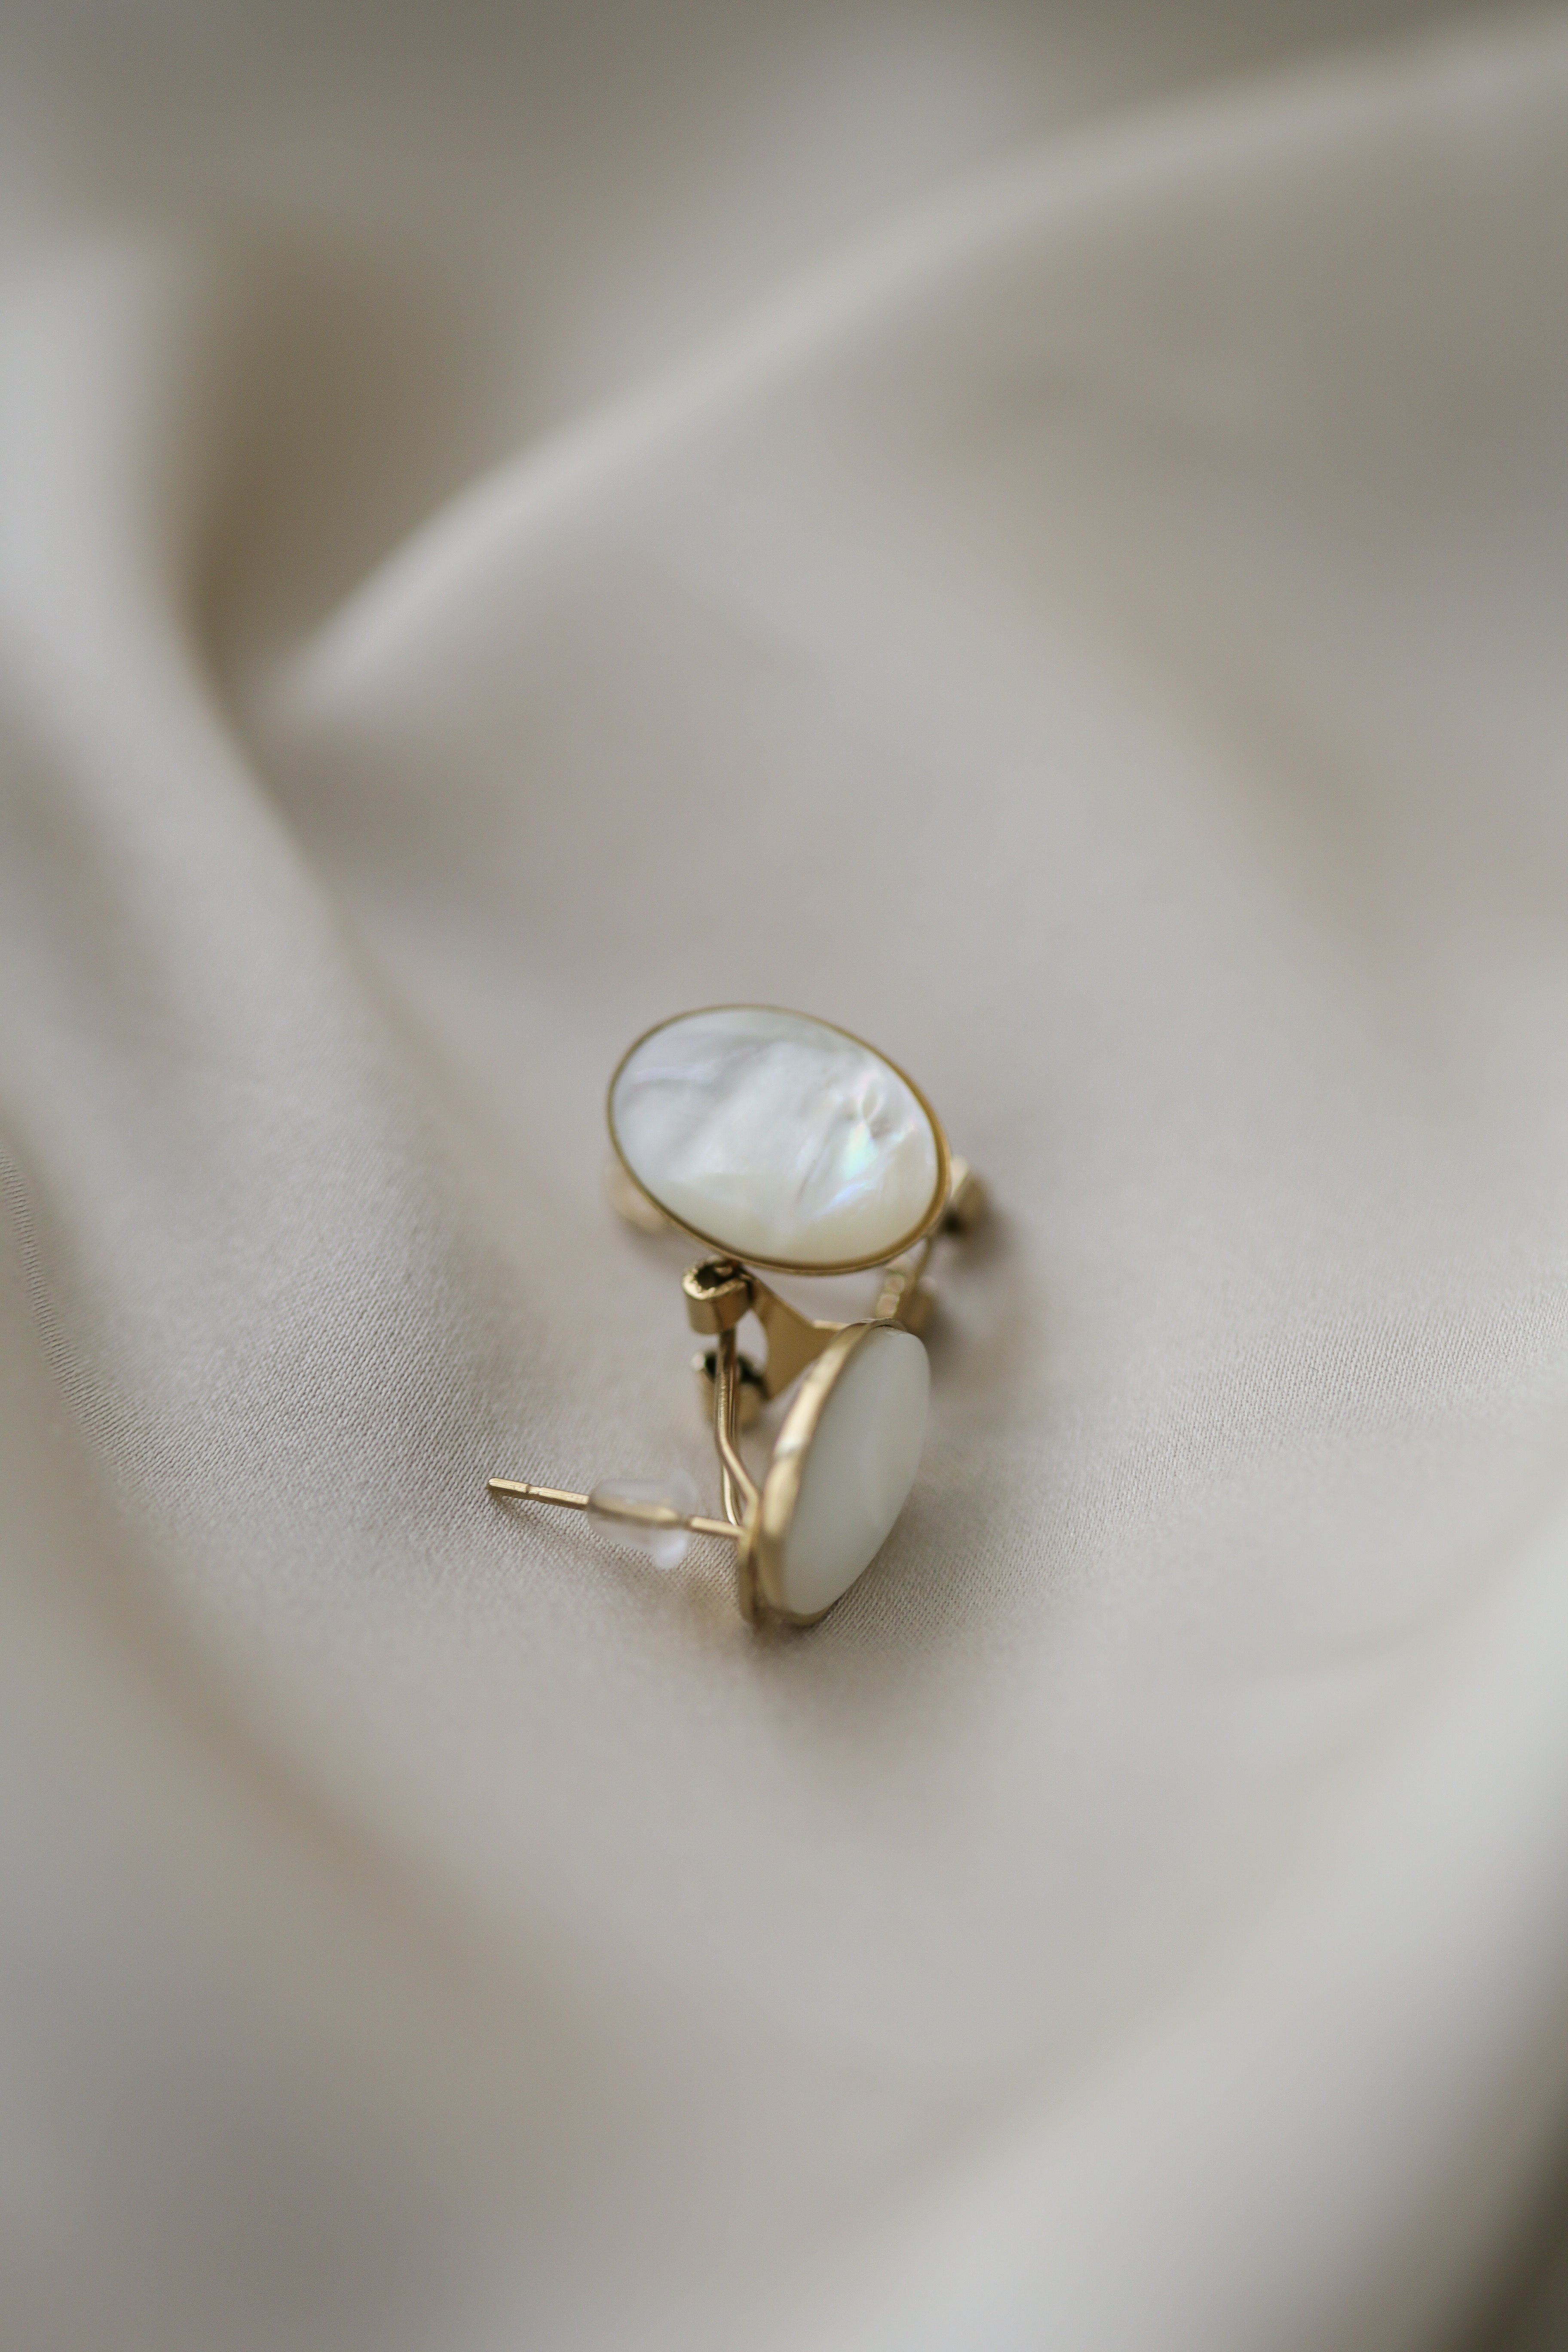 Xanthia Earrings - Boutique Minimaliste has waterproof, durable, elegant and vintage inspired jewelry